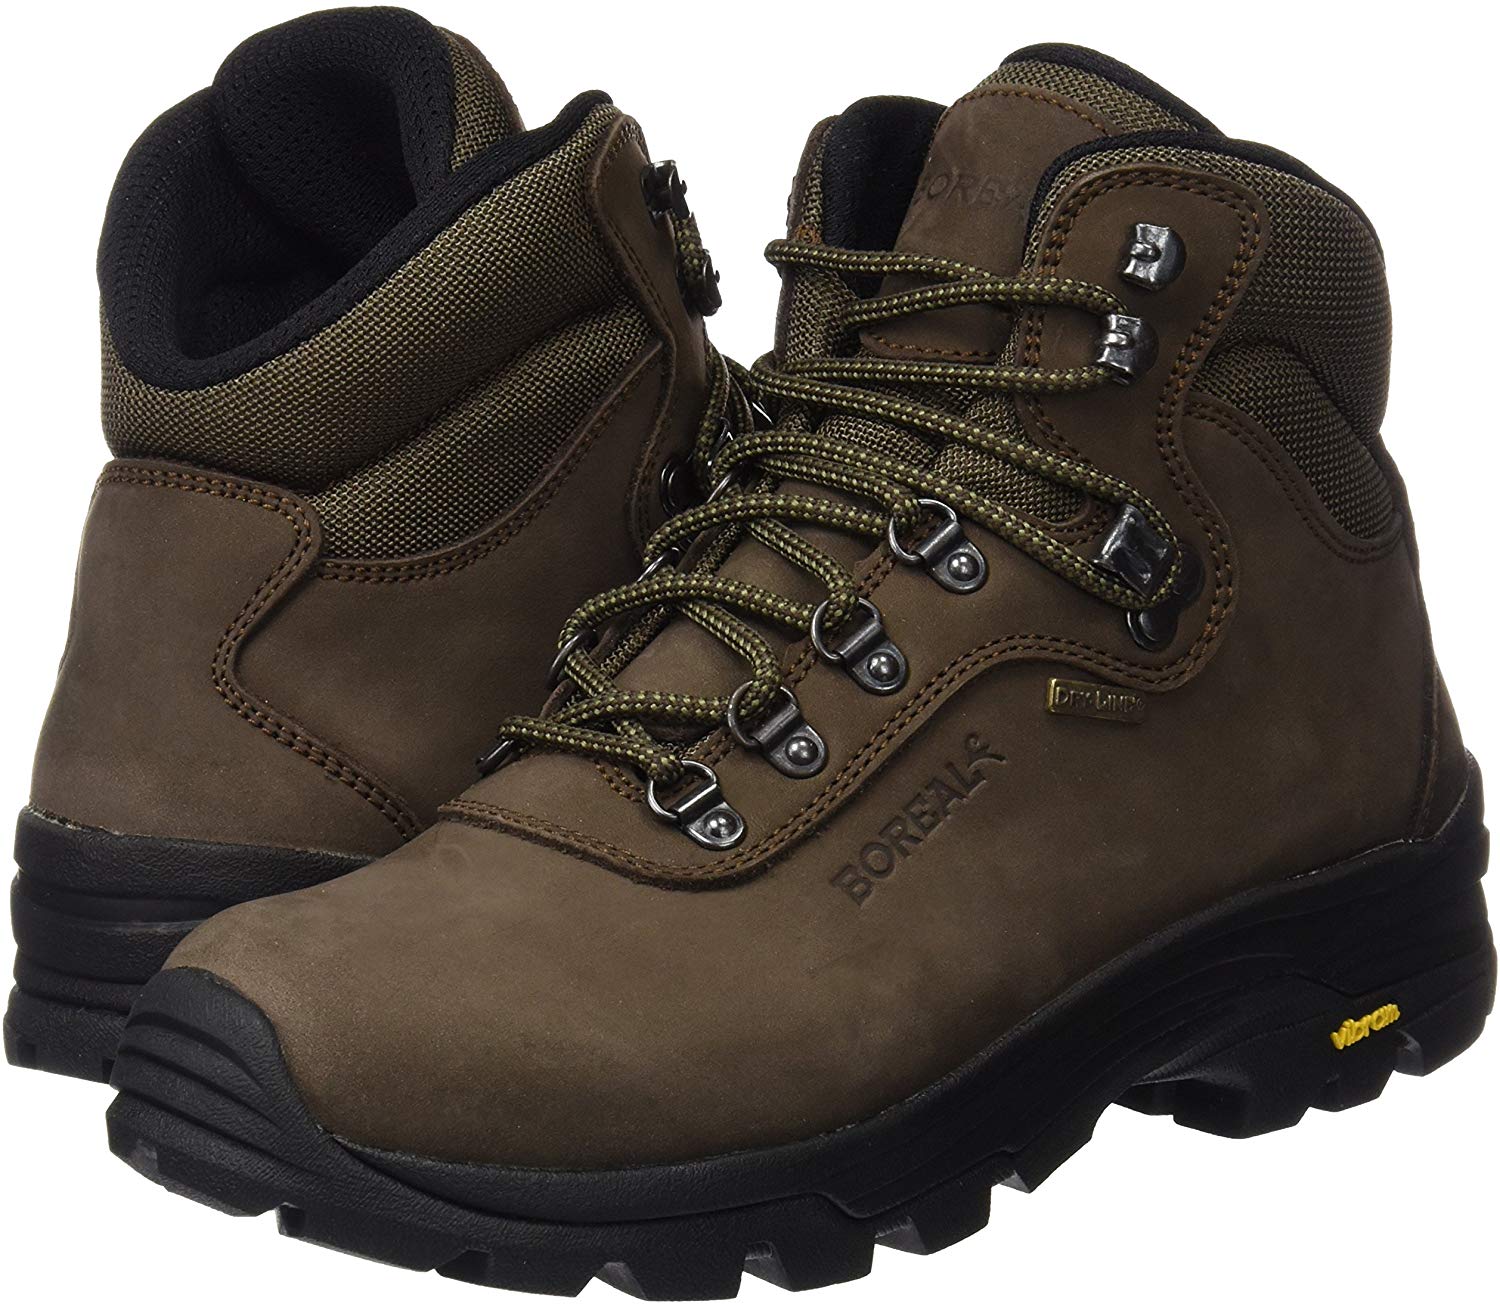 Tracks ботинки. Boreal Sherpa 2.0. Boreal ботинки треккинговые. Треккинговые ботинки Boreal Zanskar Hiking Boots. Boreal Zanskar Full Grain туристические ботинки.